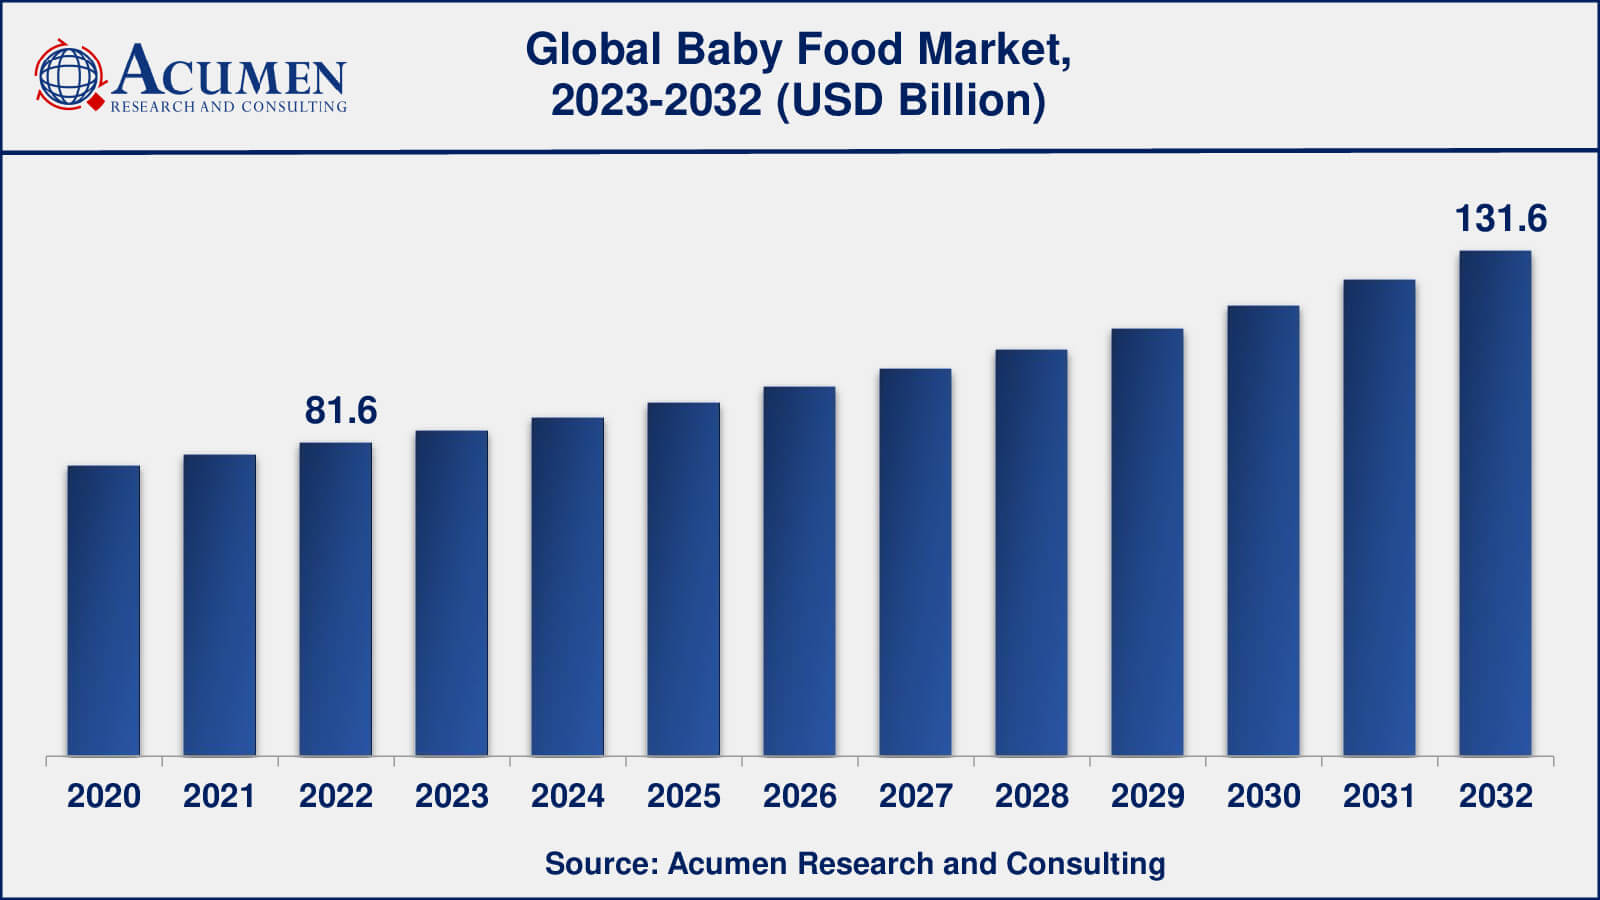 Global Baby Food Market Dynamics